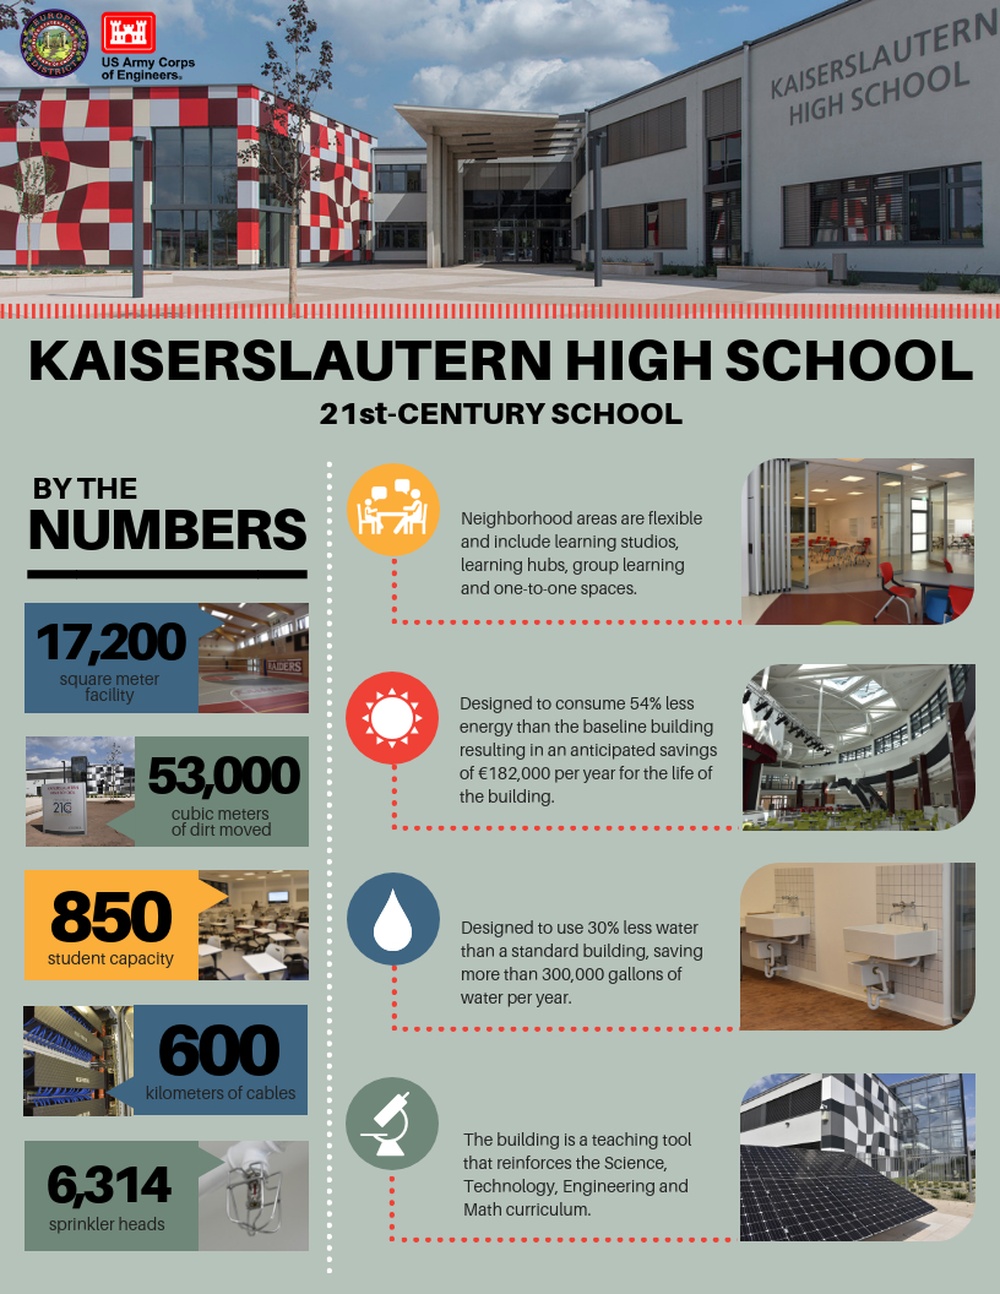 Kaiserslautern High School Infographic